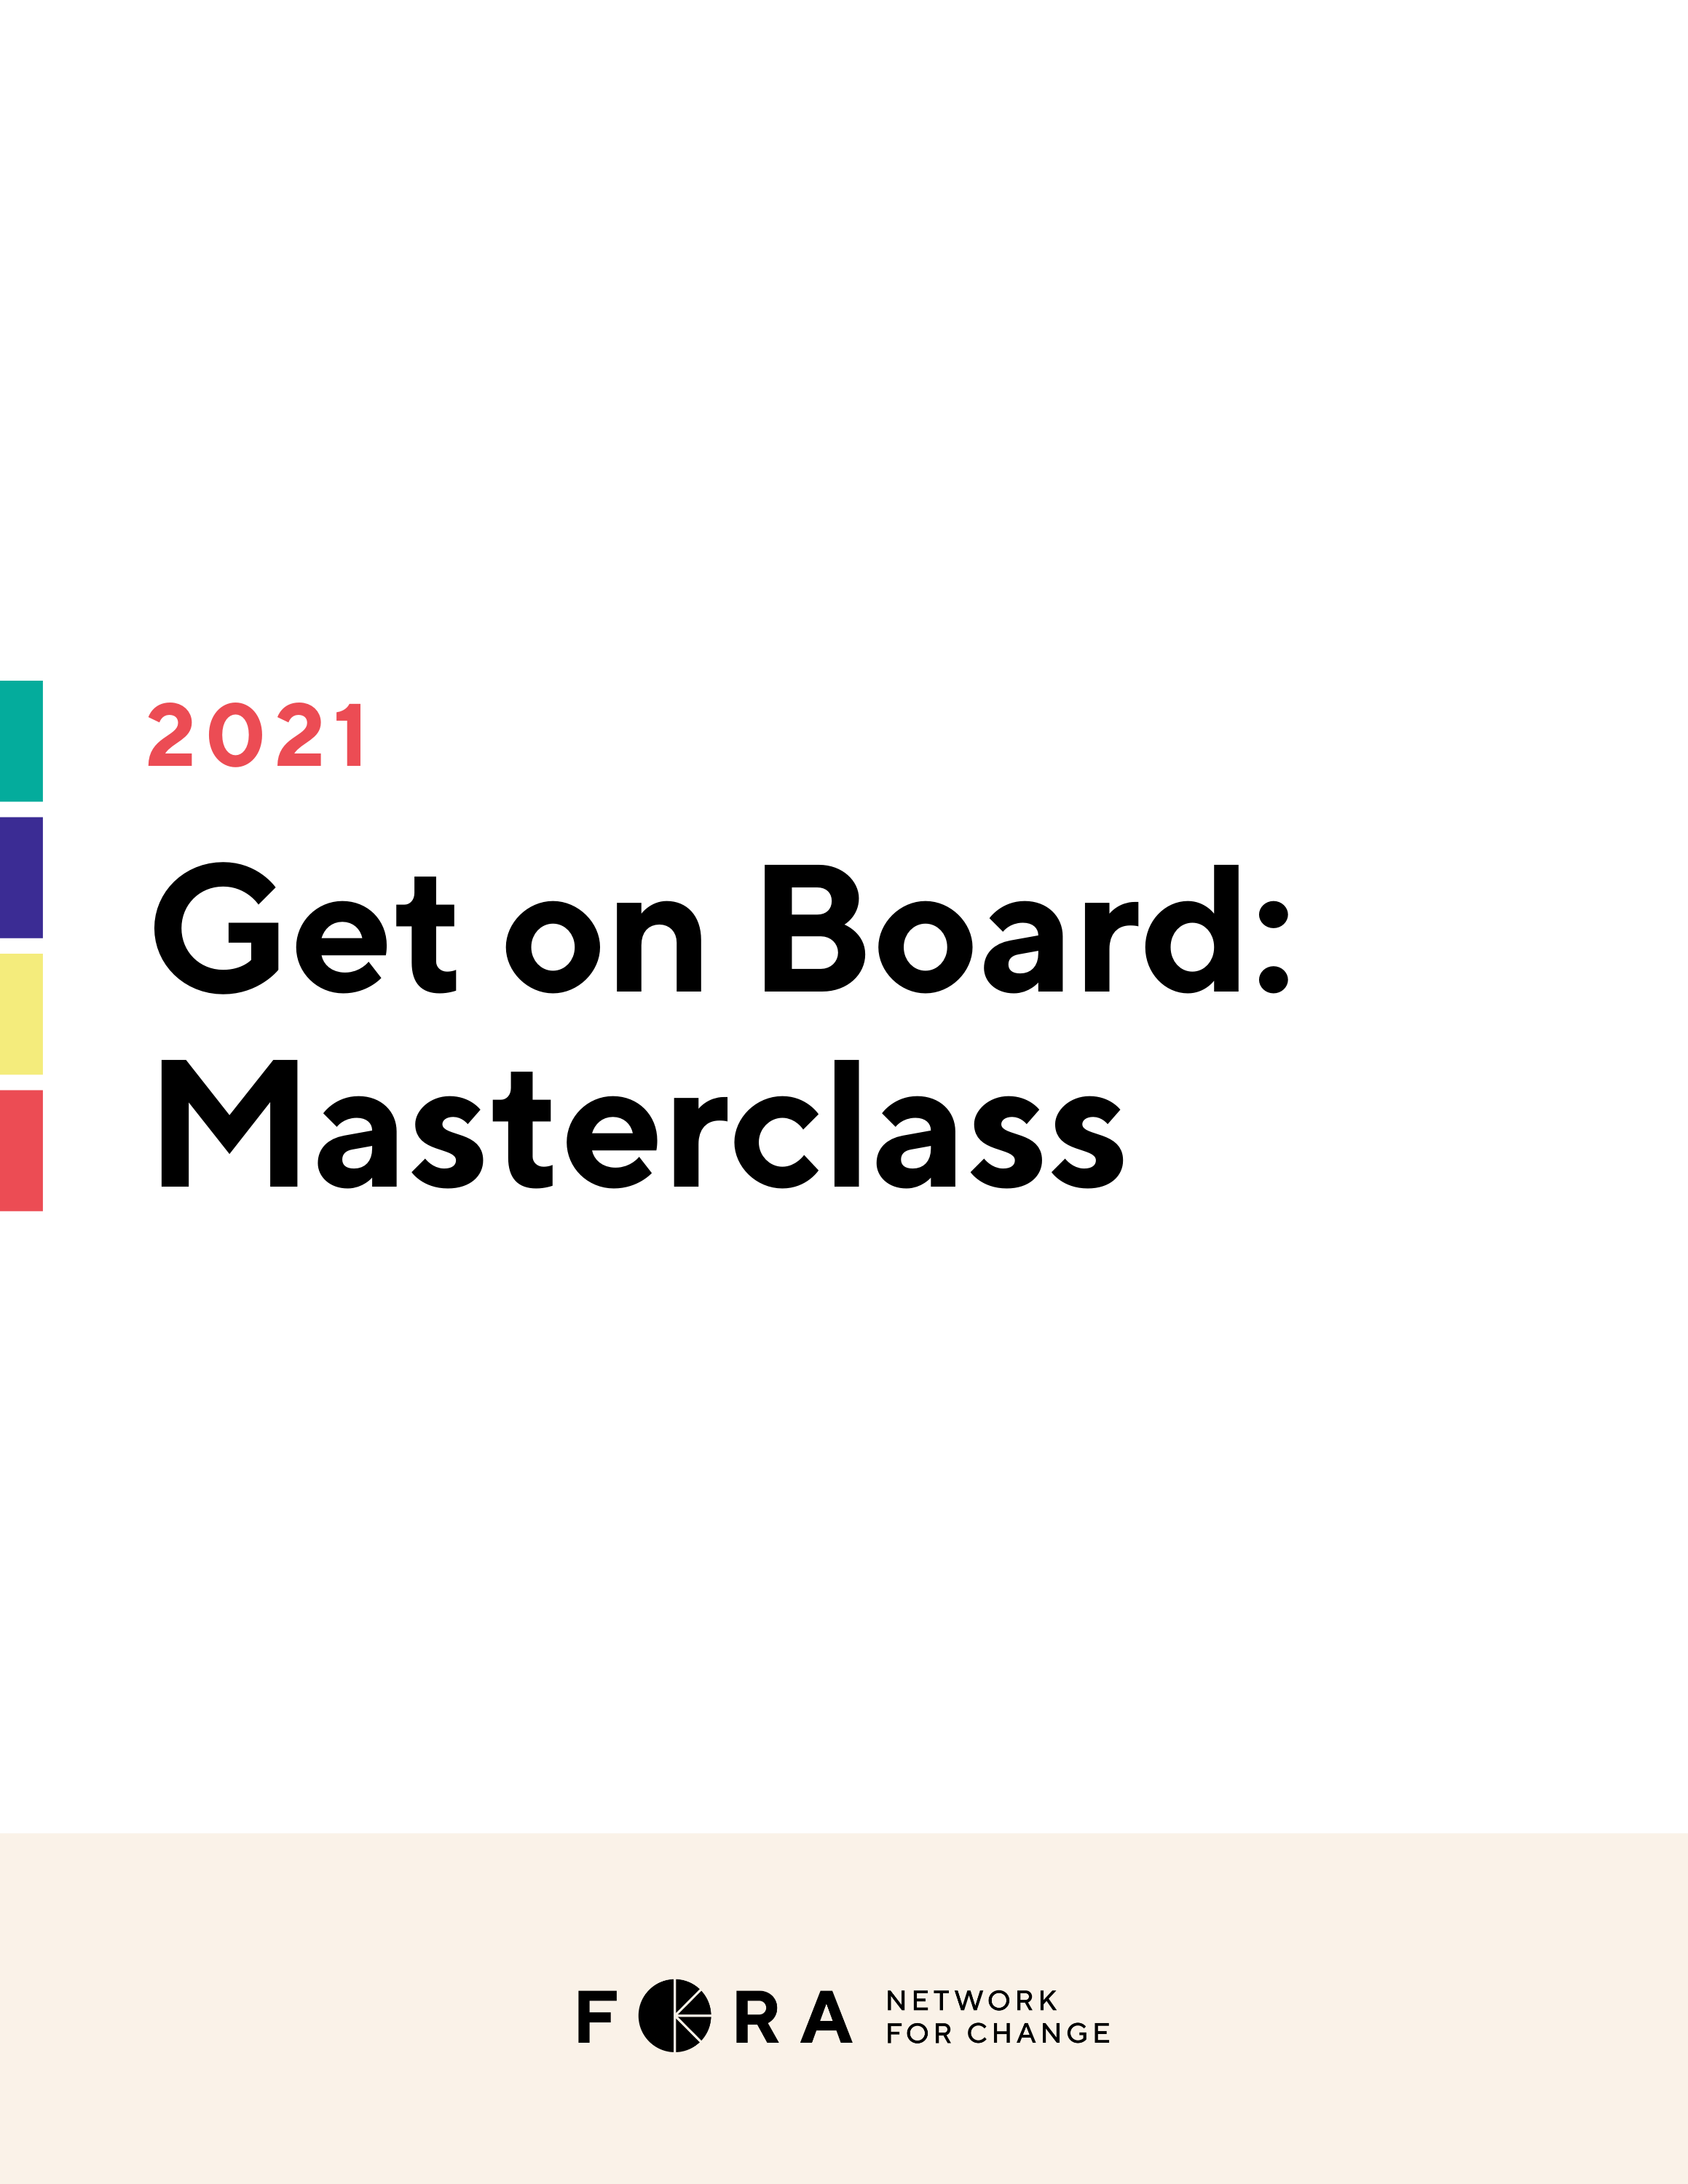 Get on Board: Masterclass 2021 Recap